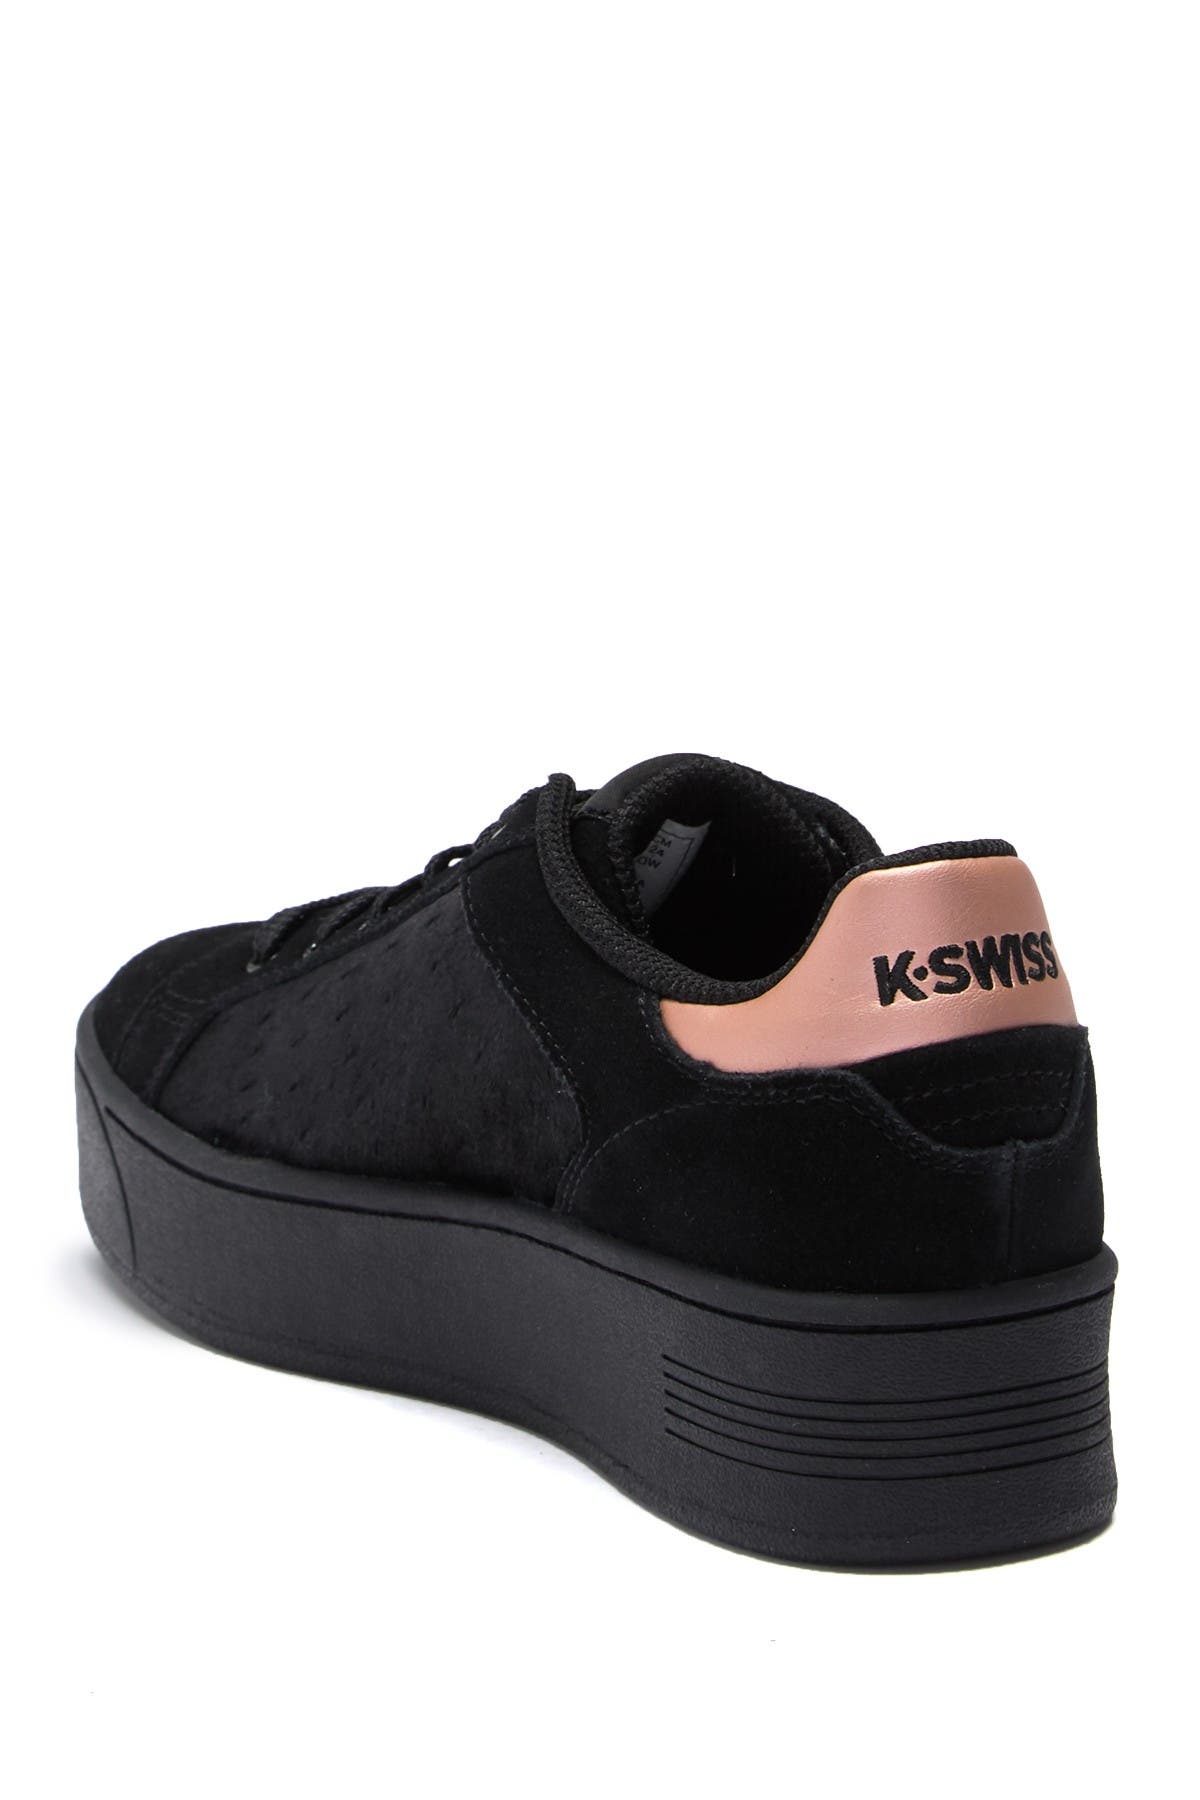 k swiss platform sneakers